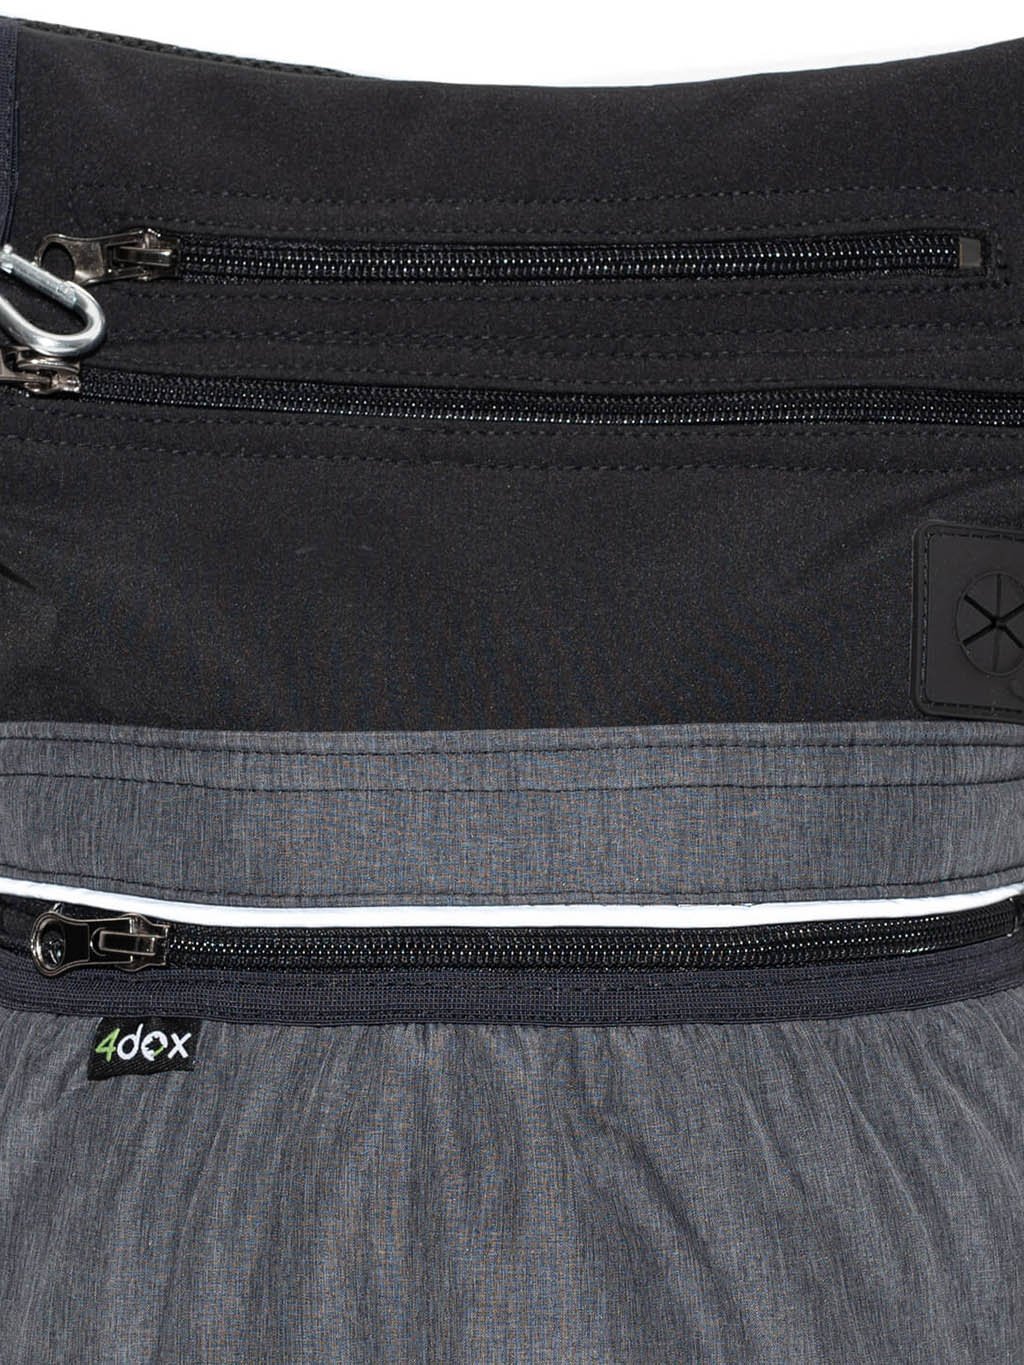 Treat bag 3 in 1 - customized